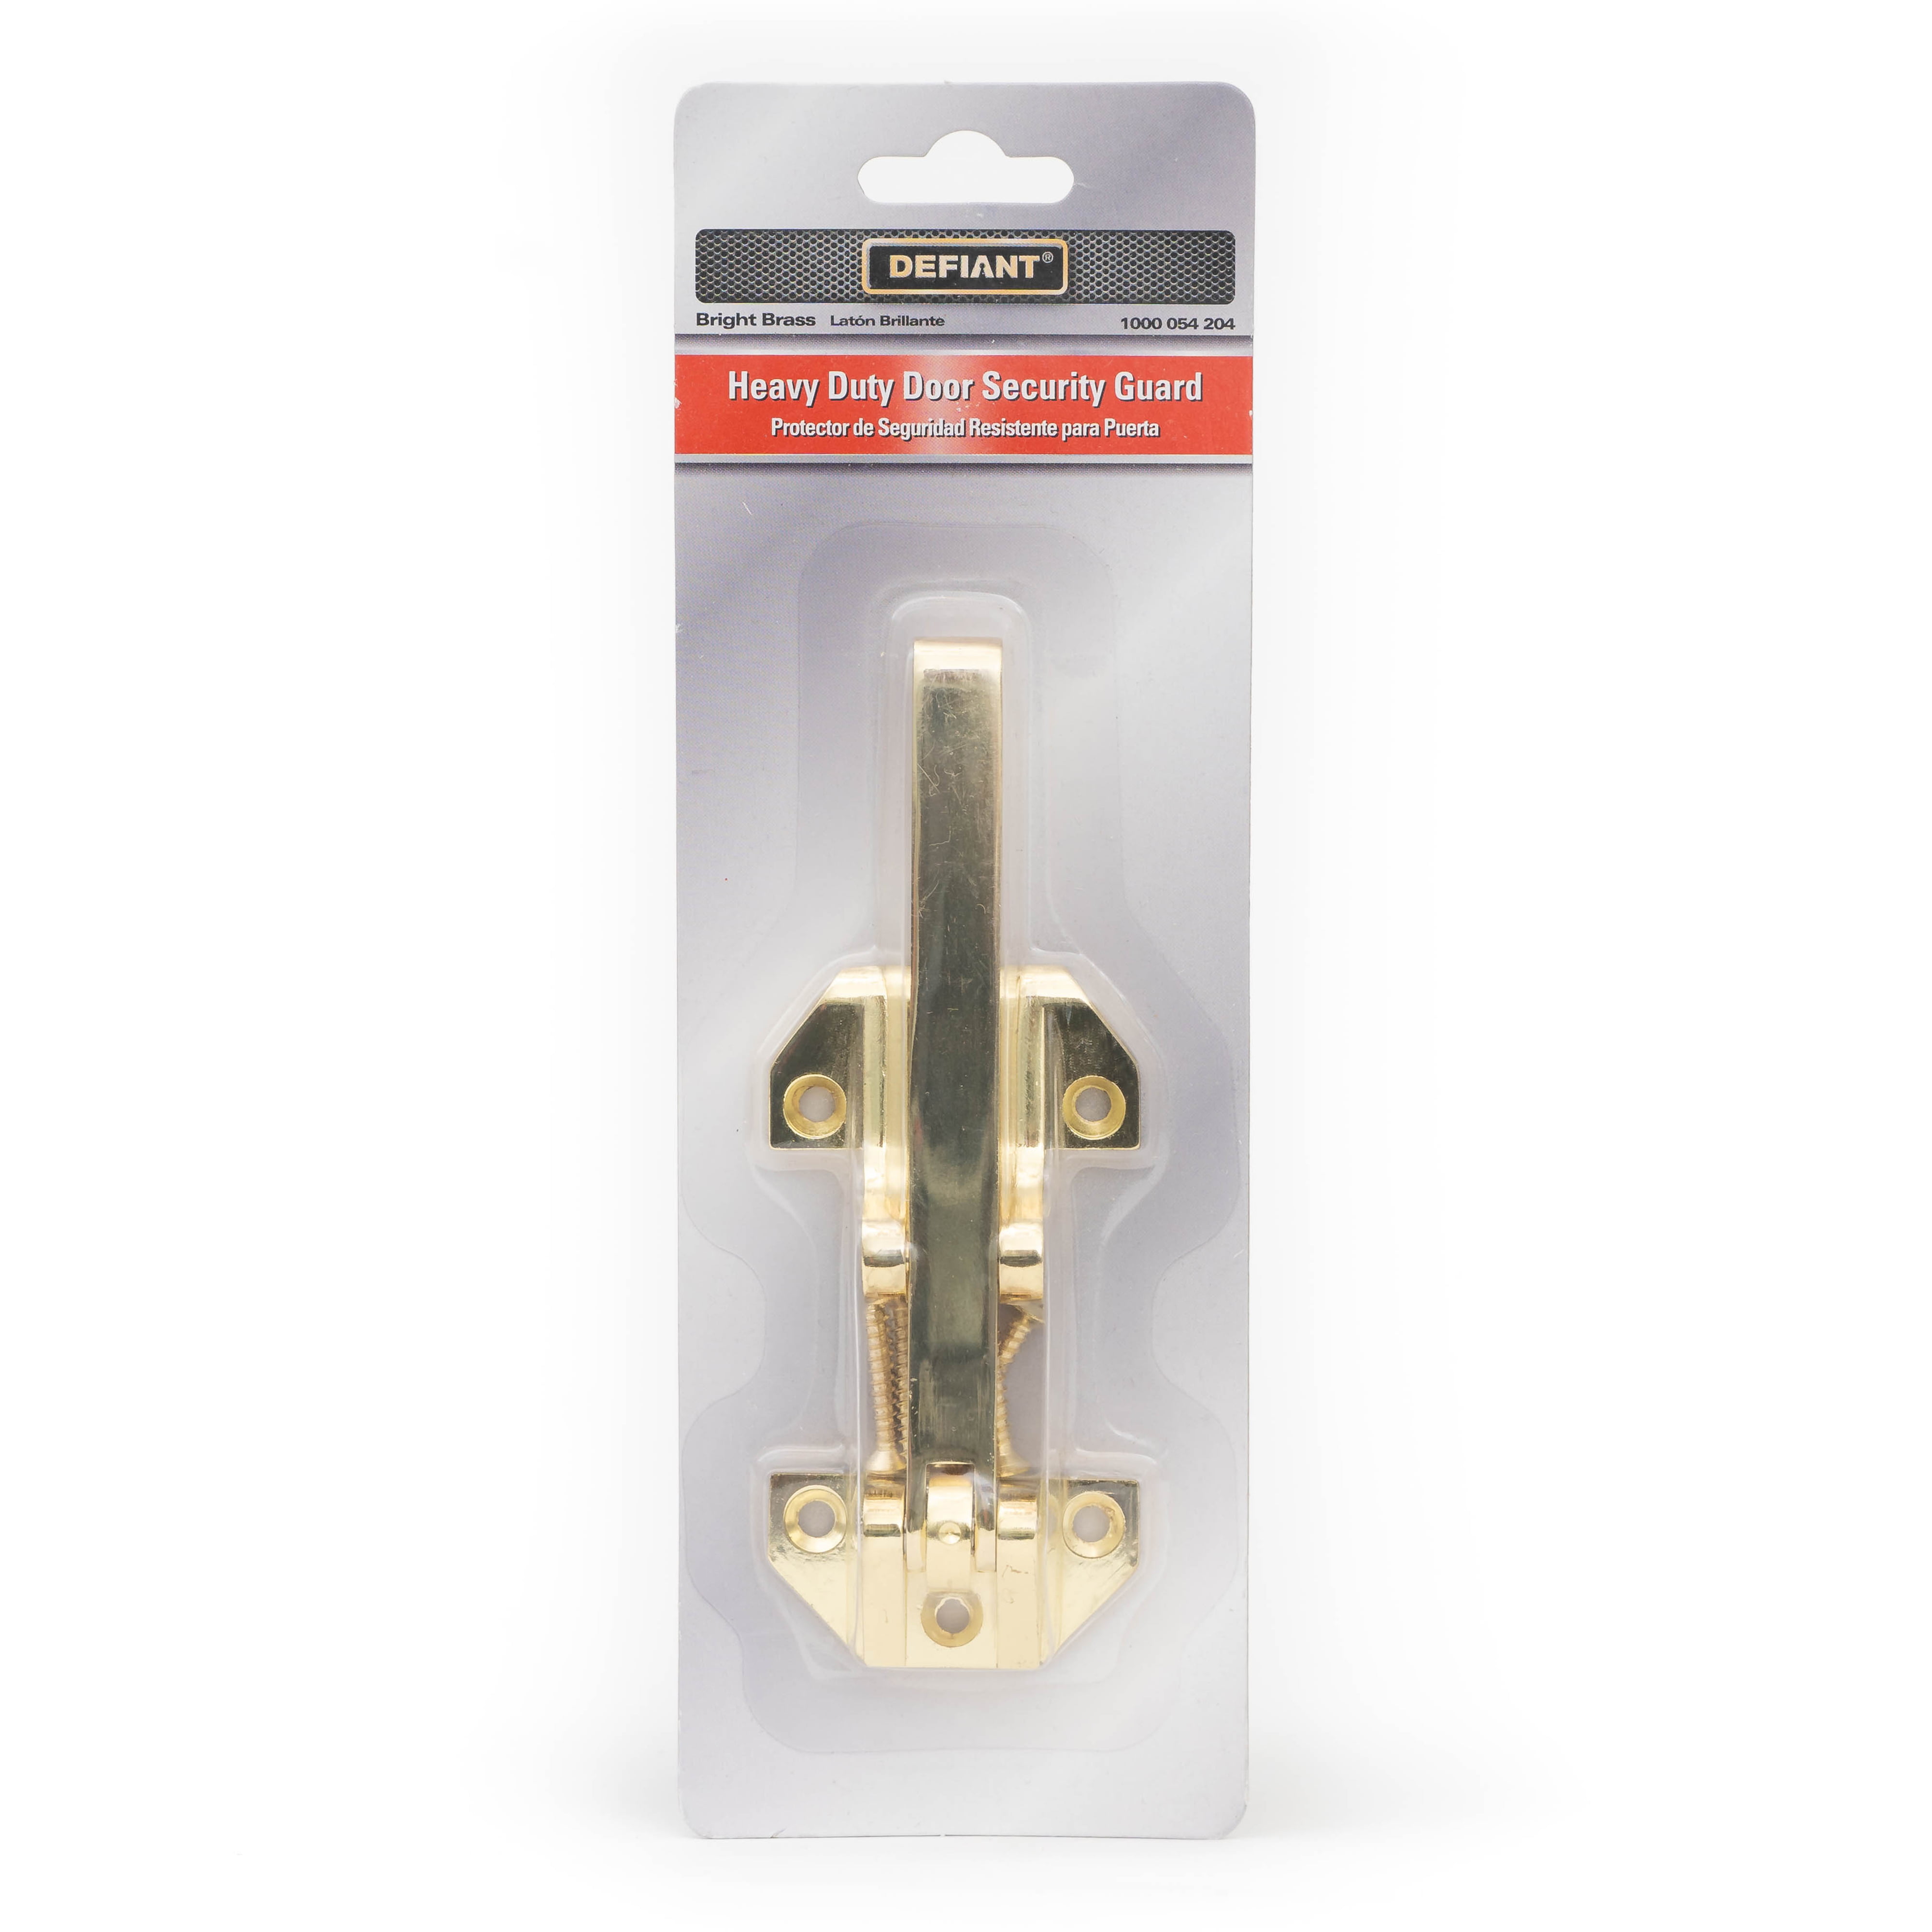 UK Strong Steel Door Chain & Screws HIGH Security Safety Guard Restrictor Lock Brass